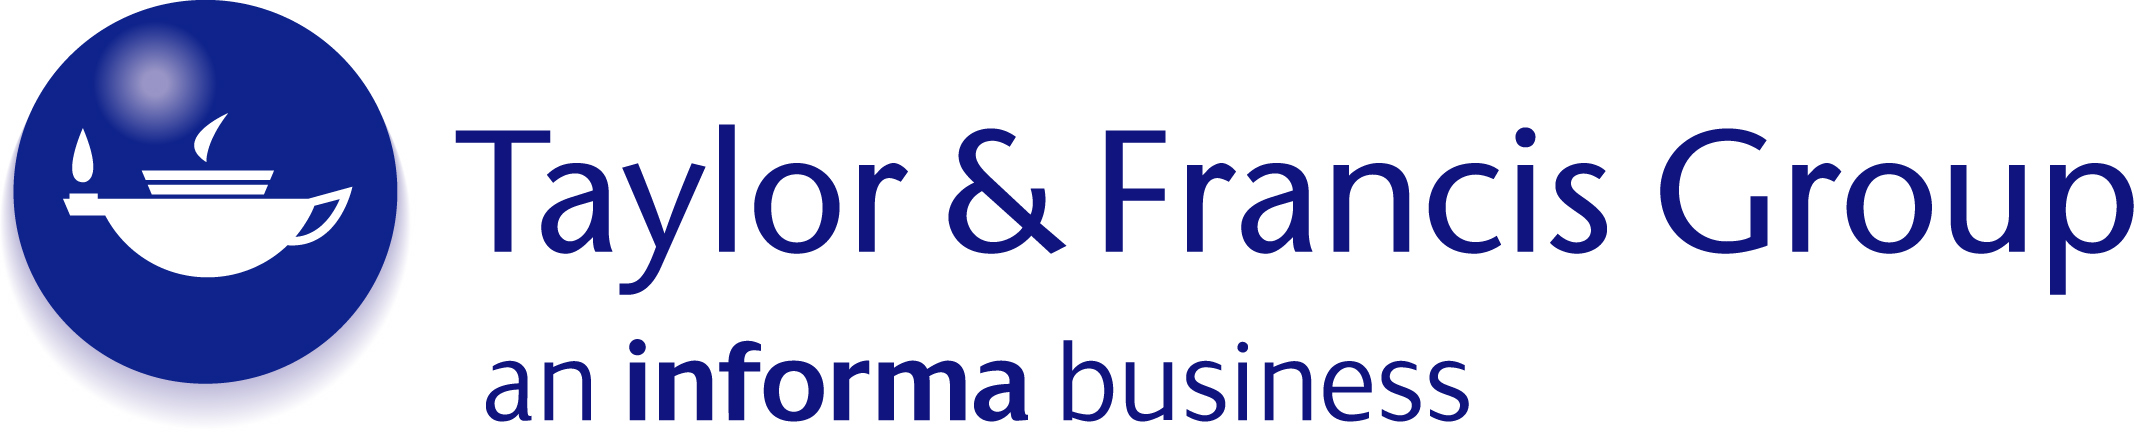 Taylor & Francis Group an Informa Business Logo